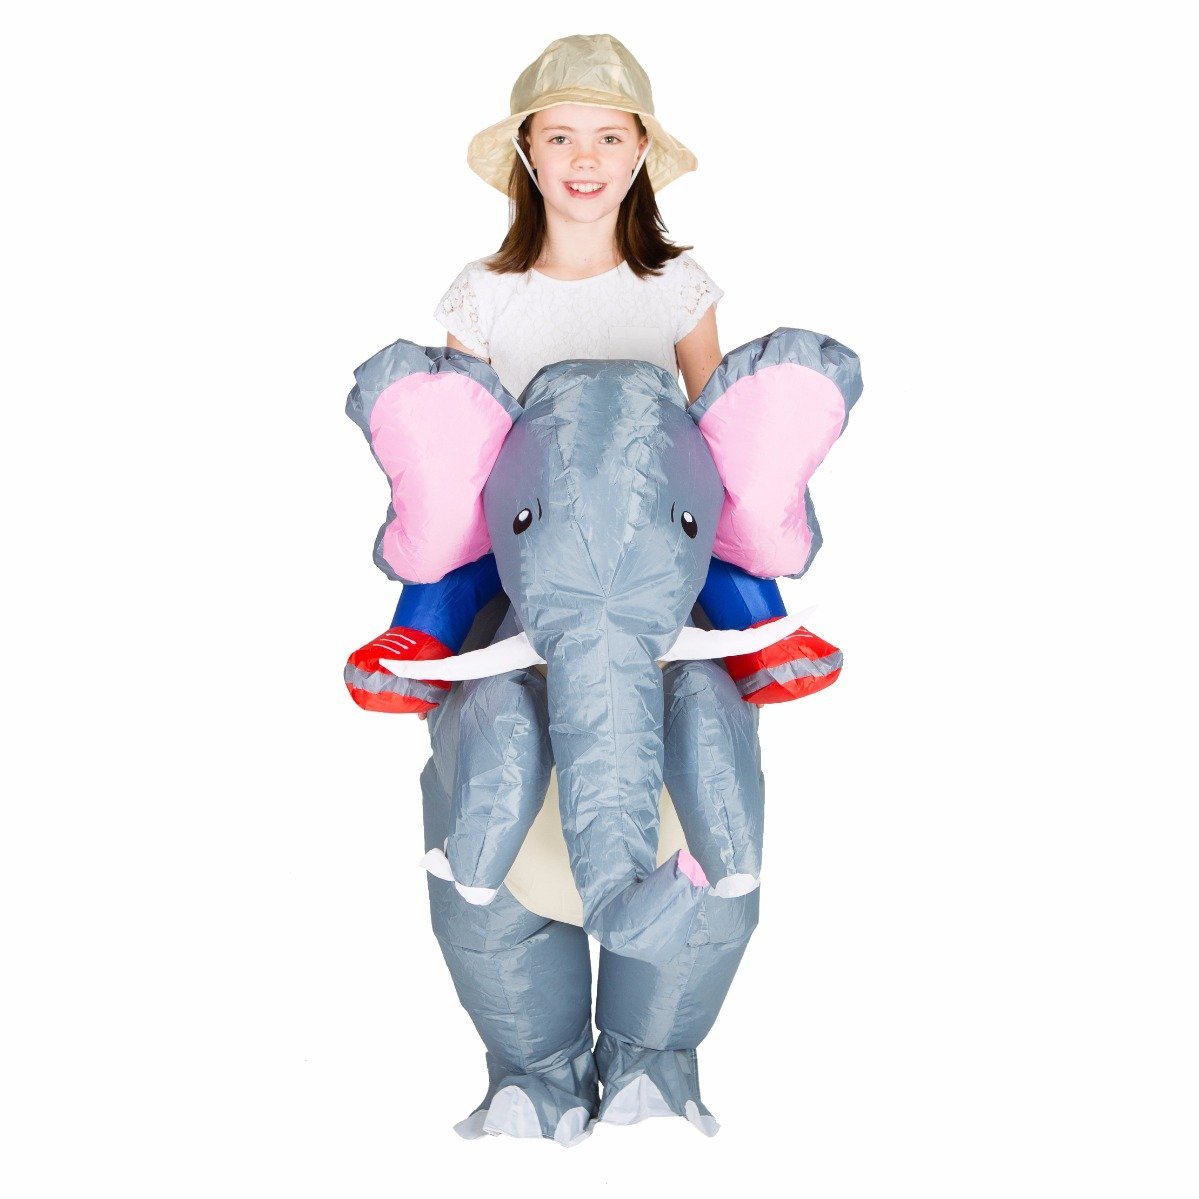 Bodysocks - Kids Inflatable Elephant Costume